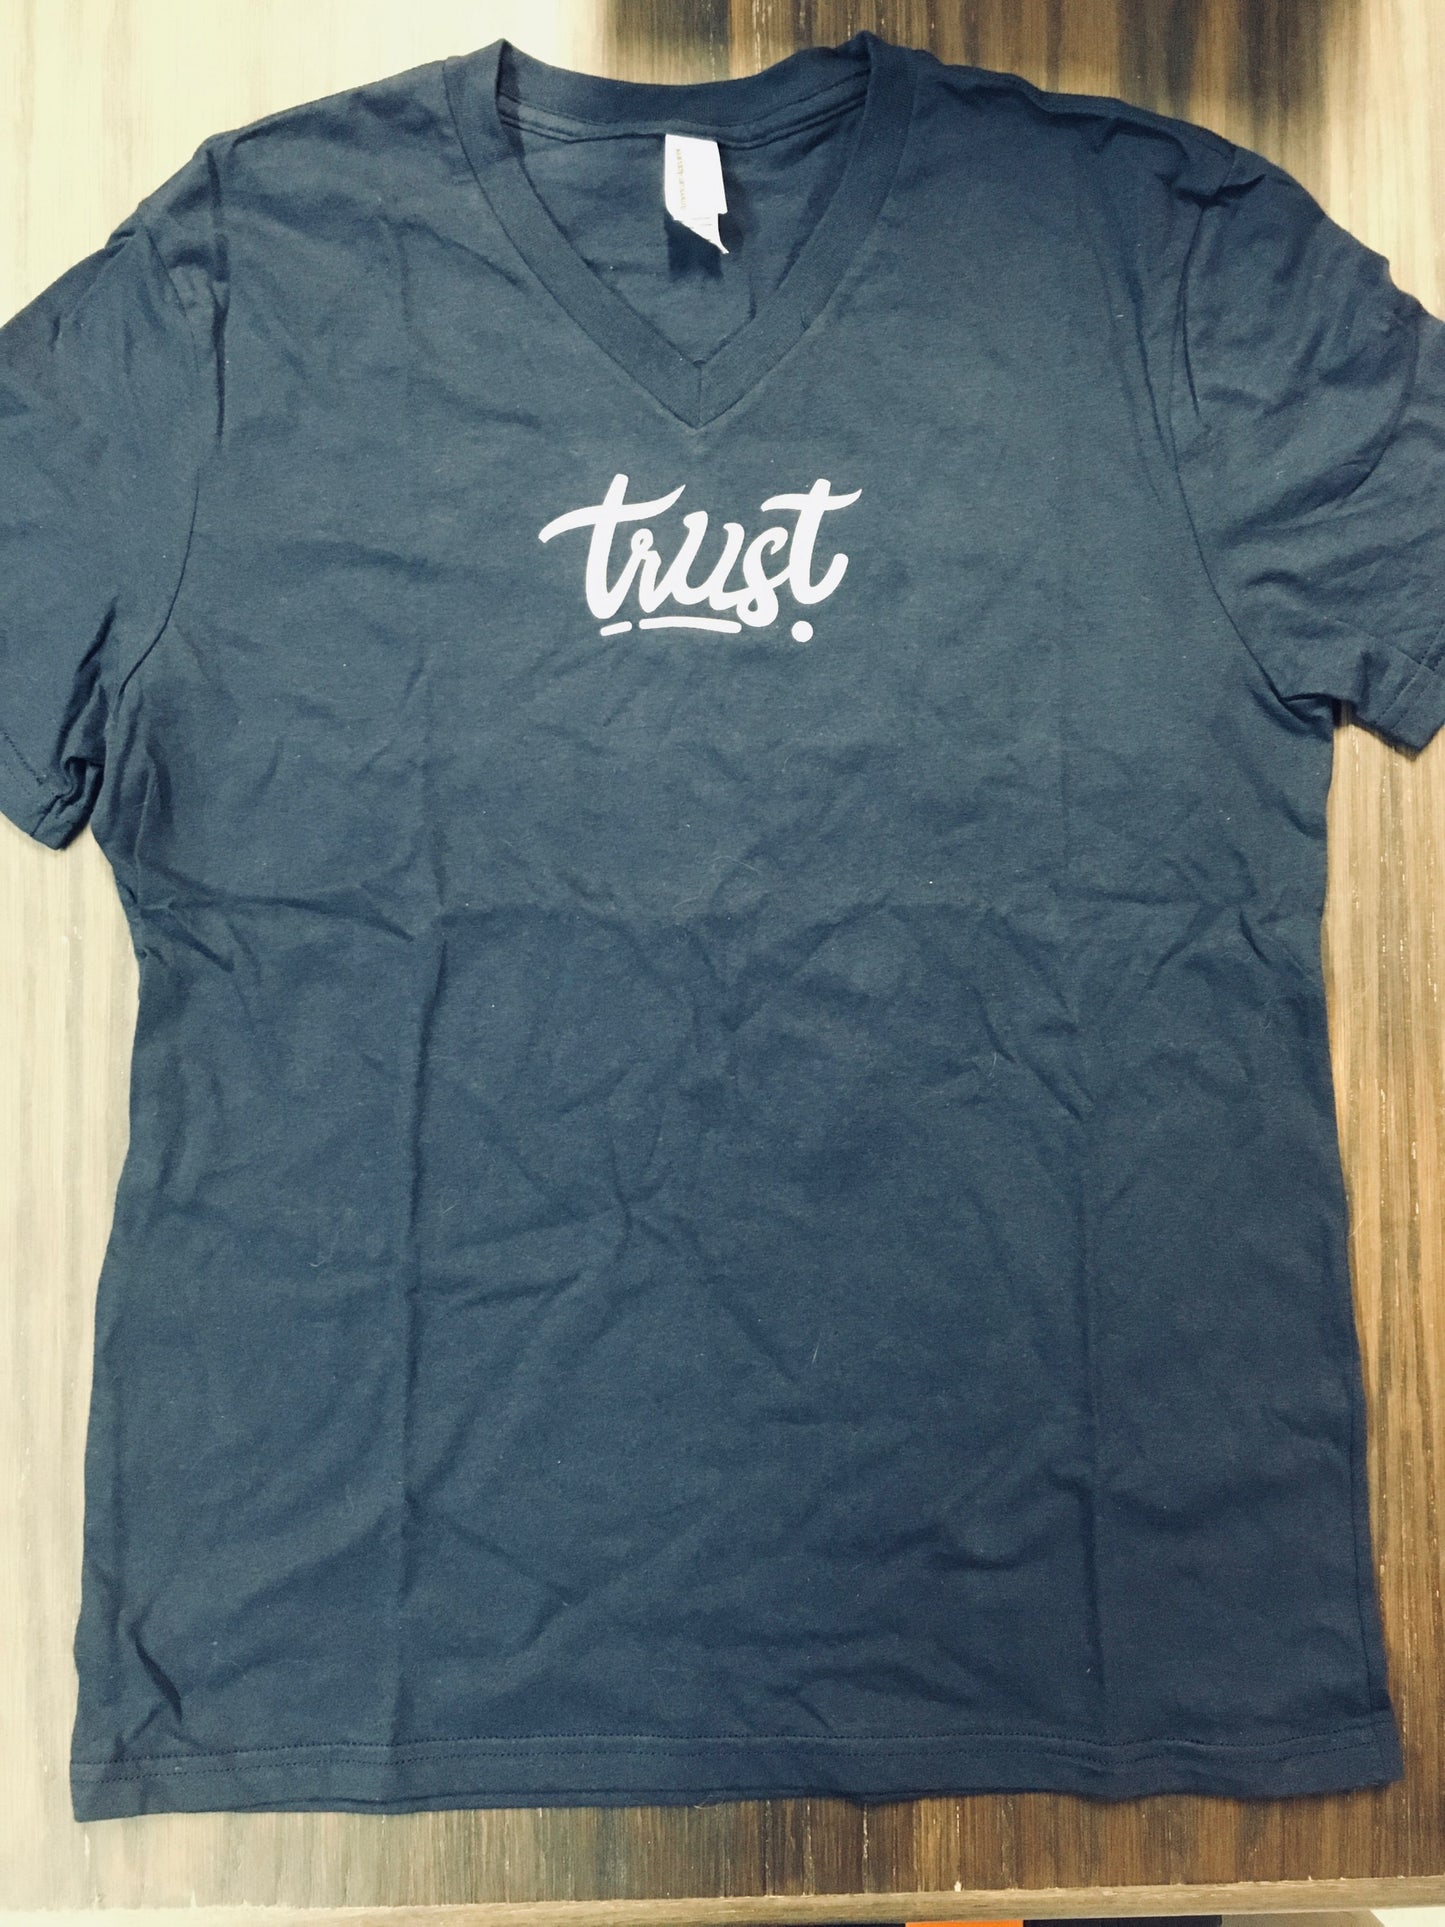 Trust short sleeve women's V neck t-shirt, navy blue